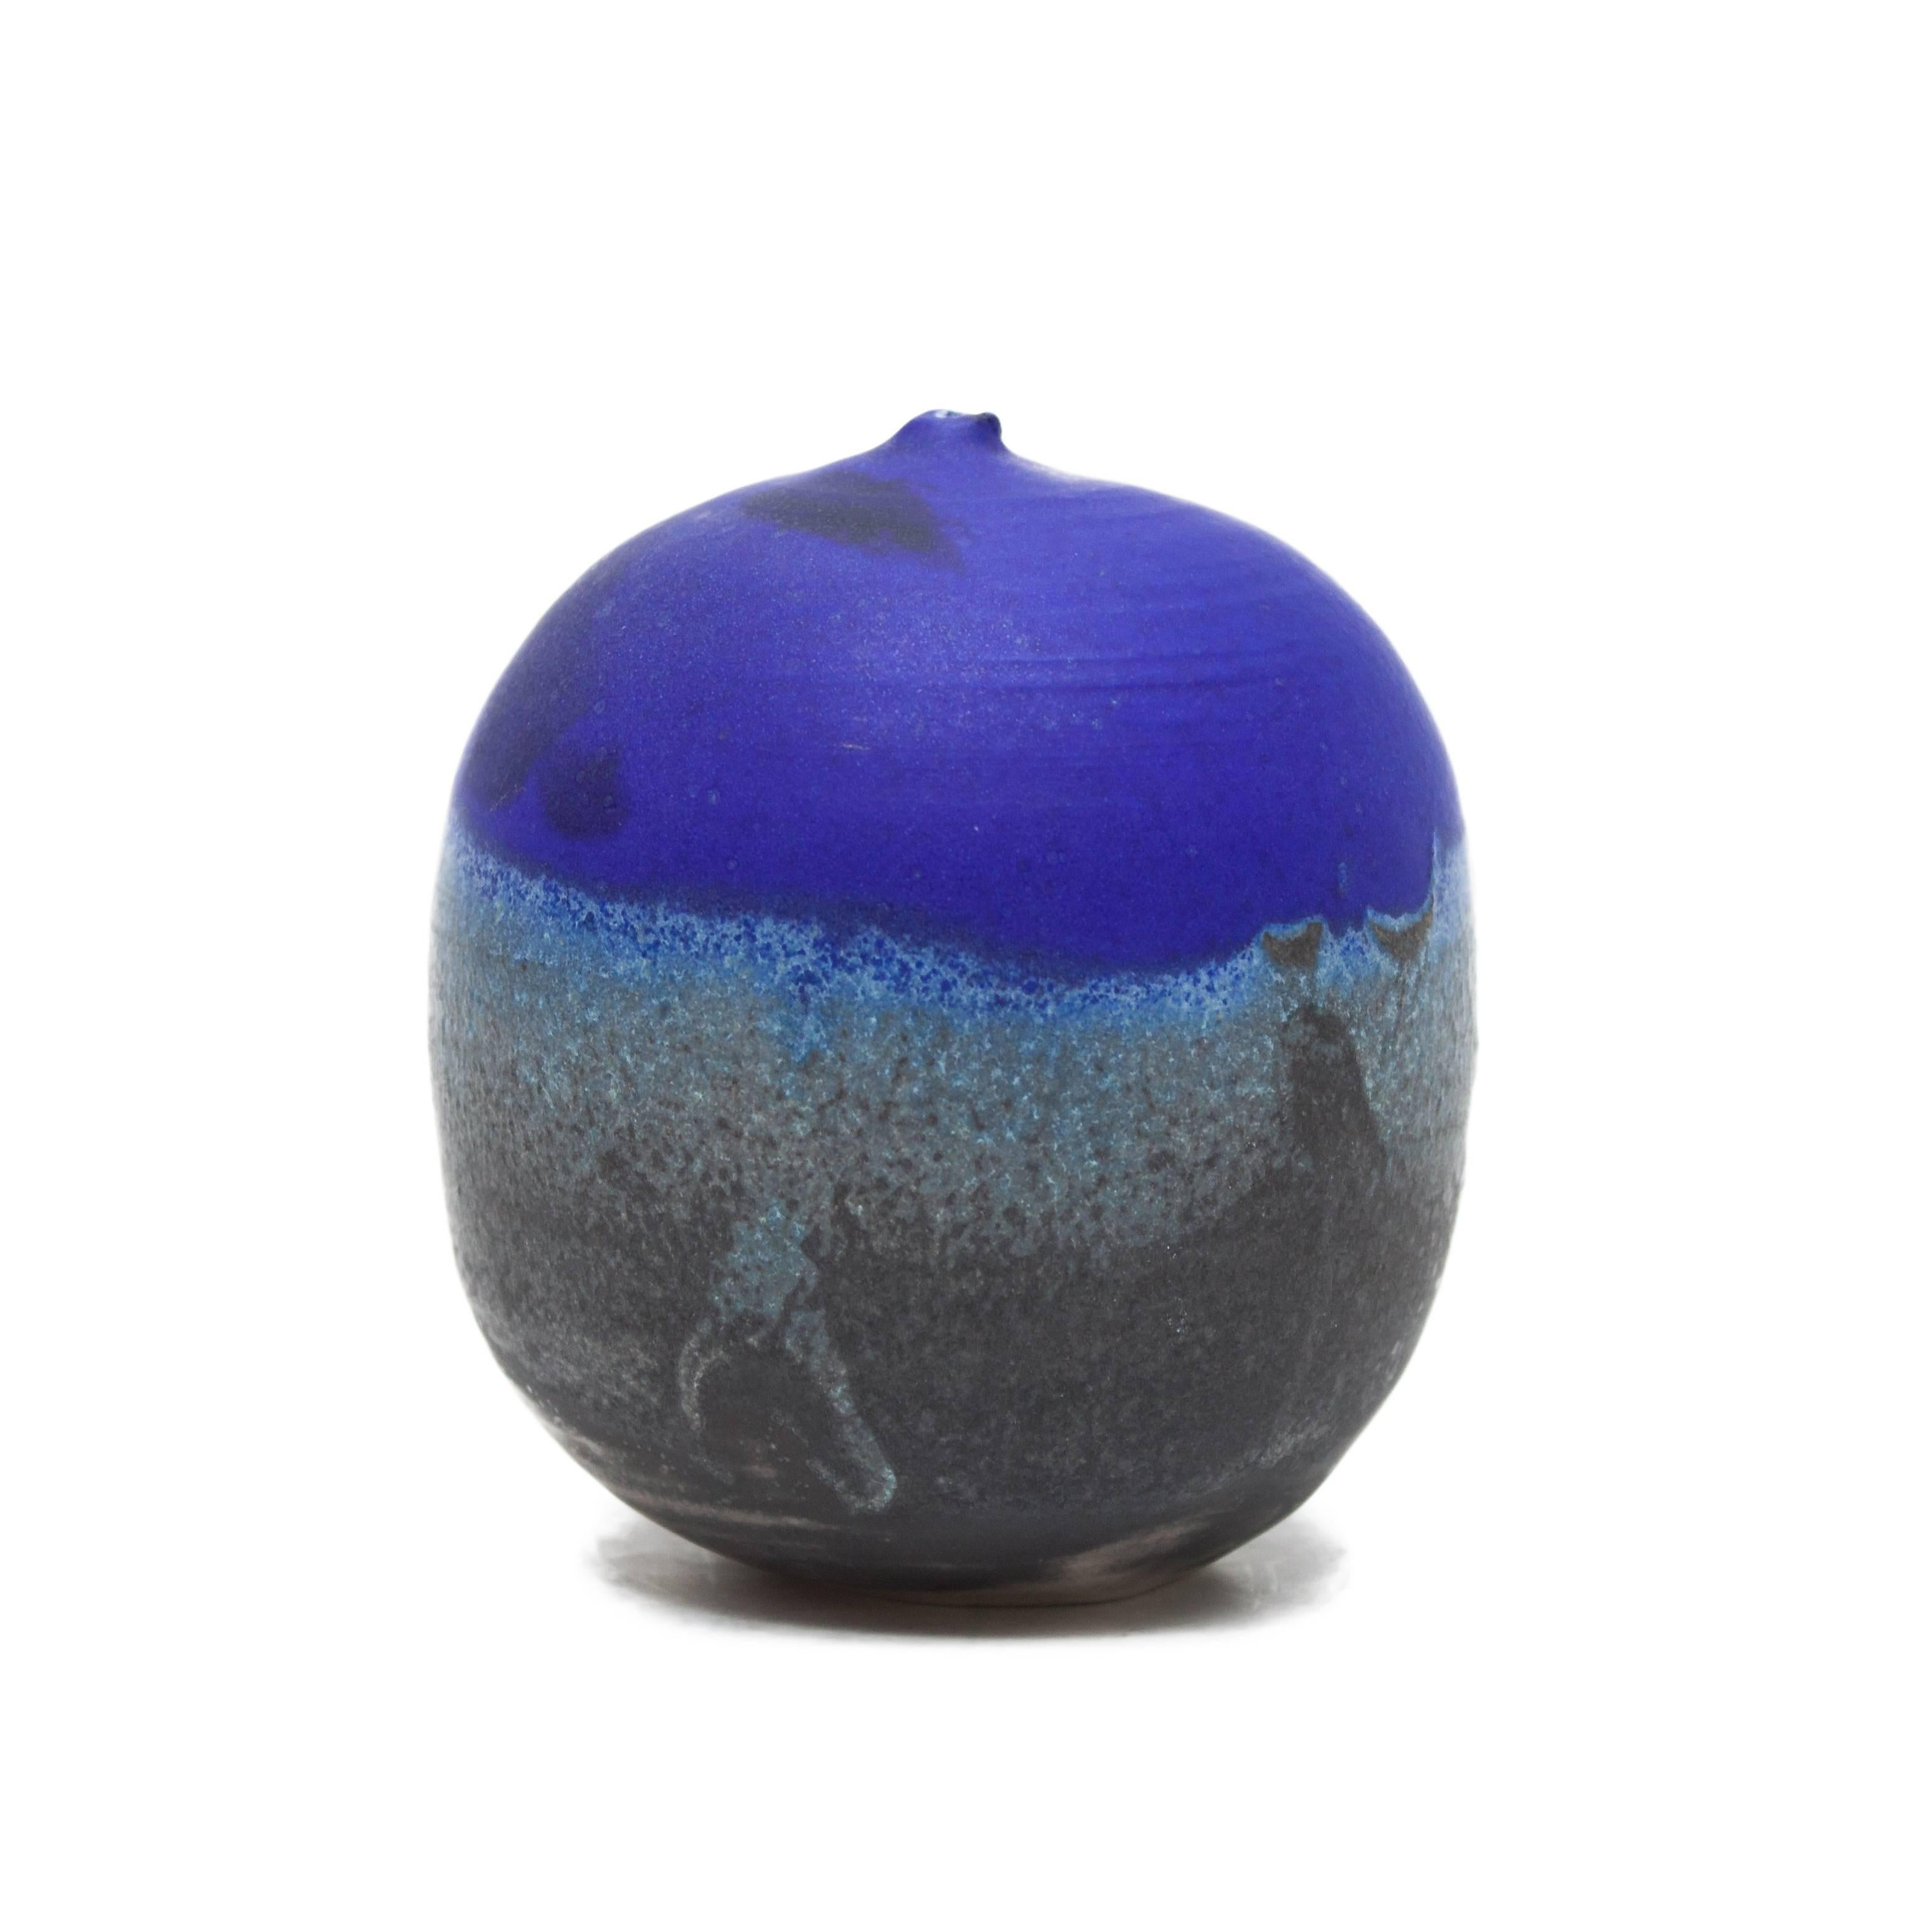 Toshiko Takaezu Abstract Sculpture - Cobalt Blue Moon Pot with Rattles